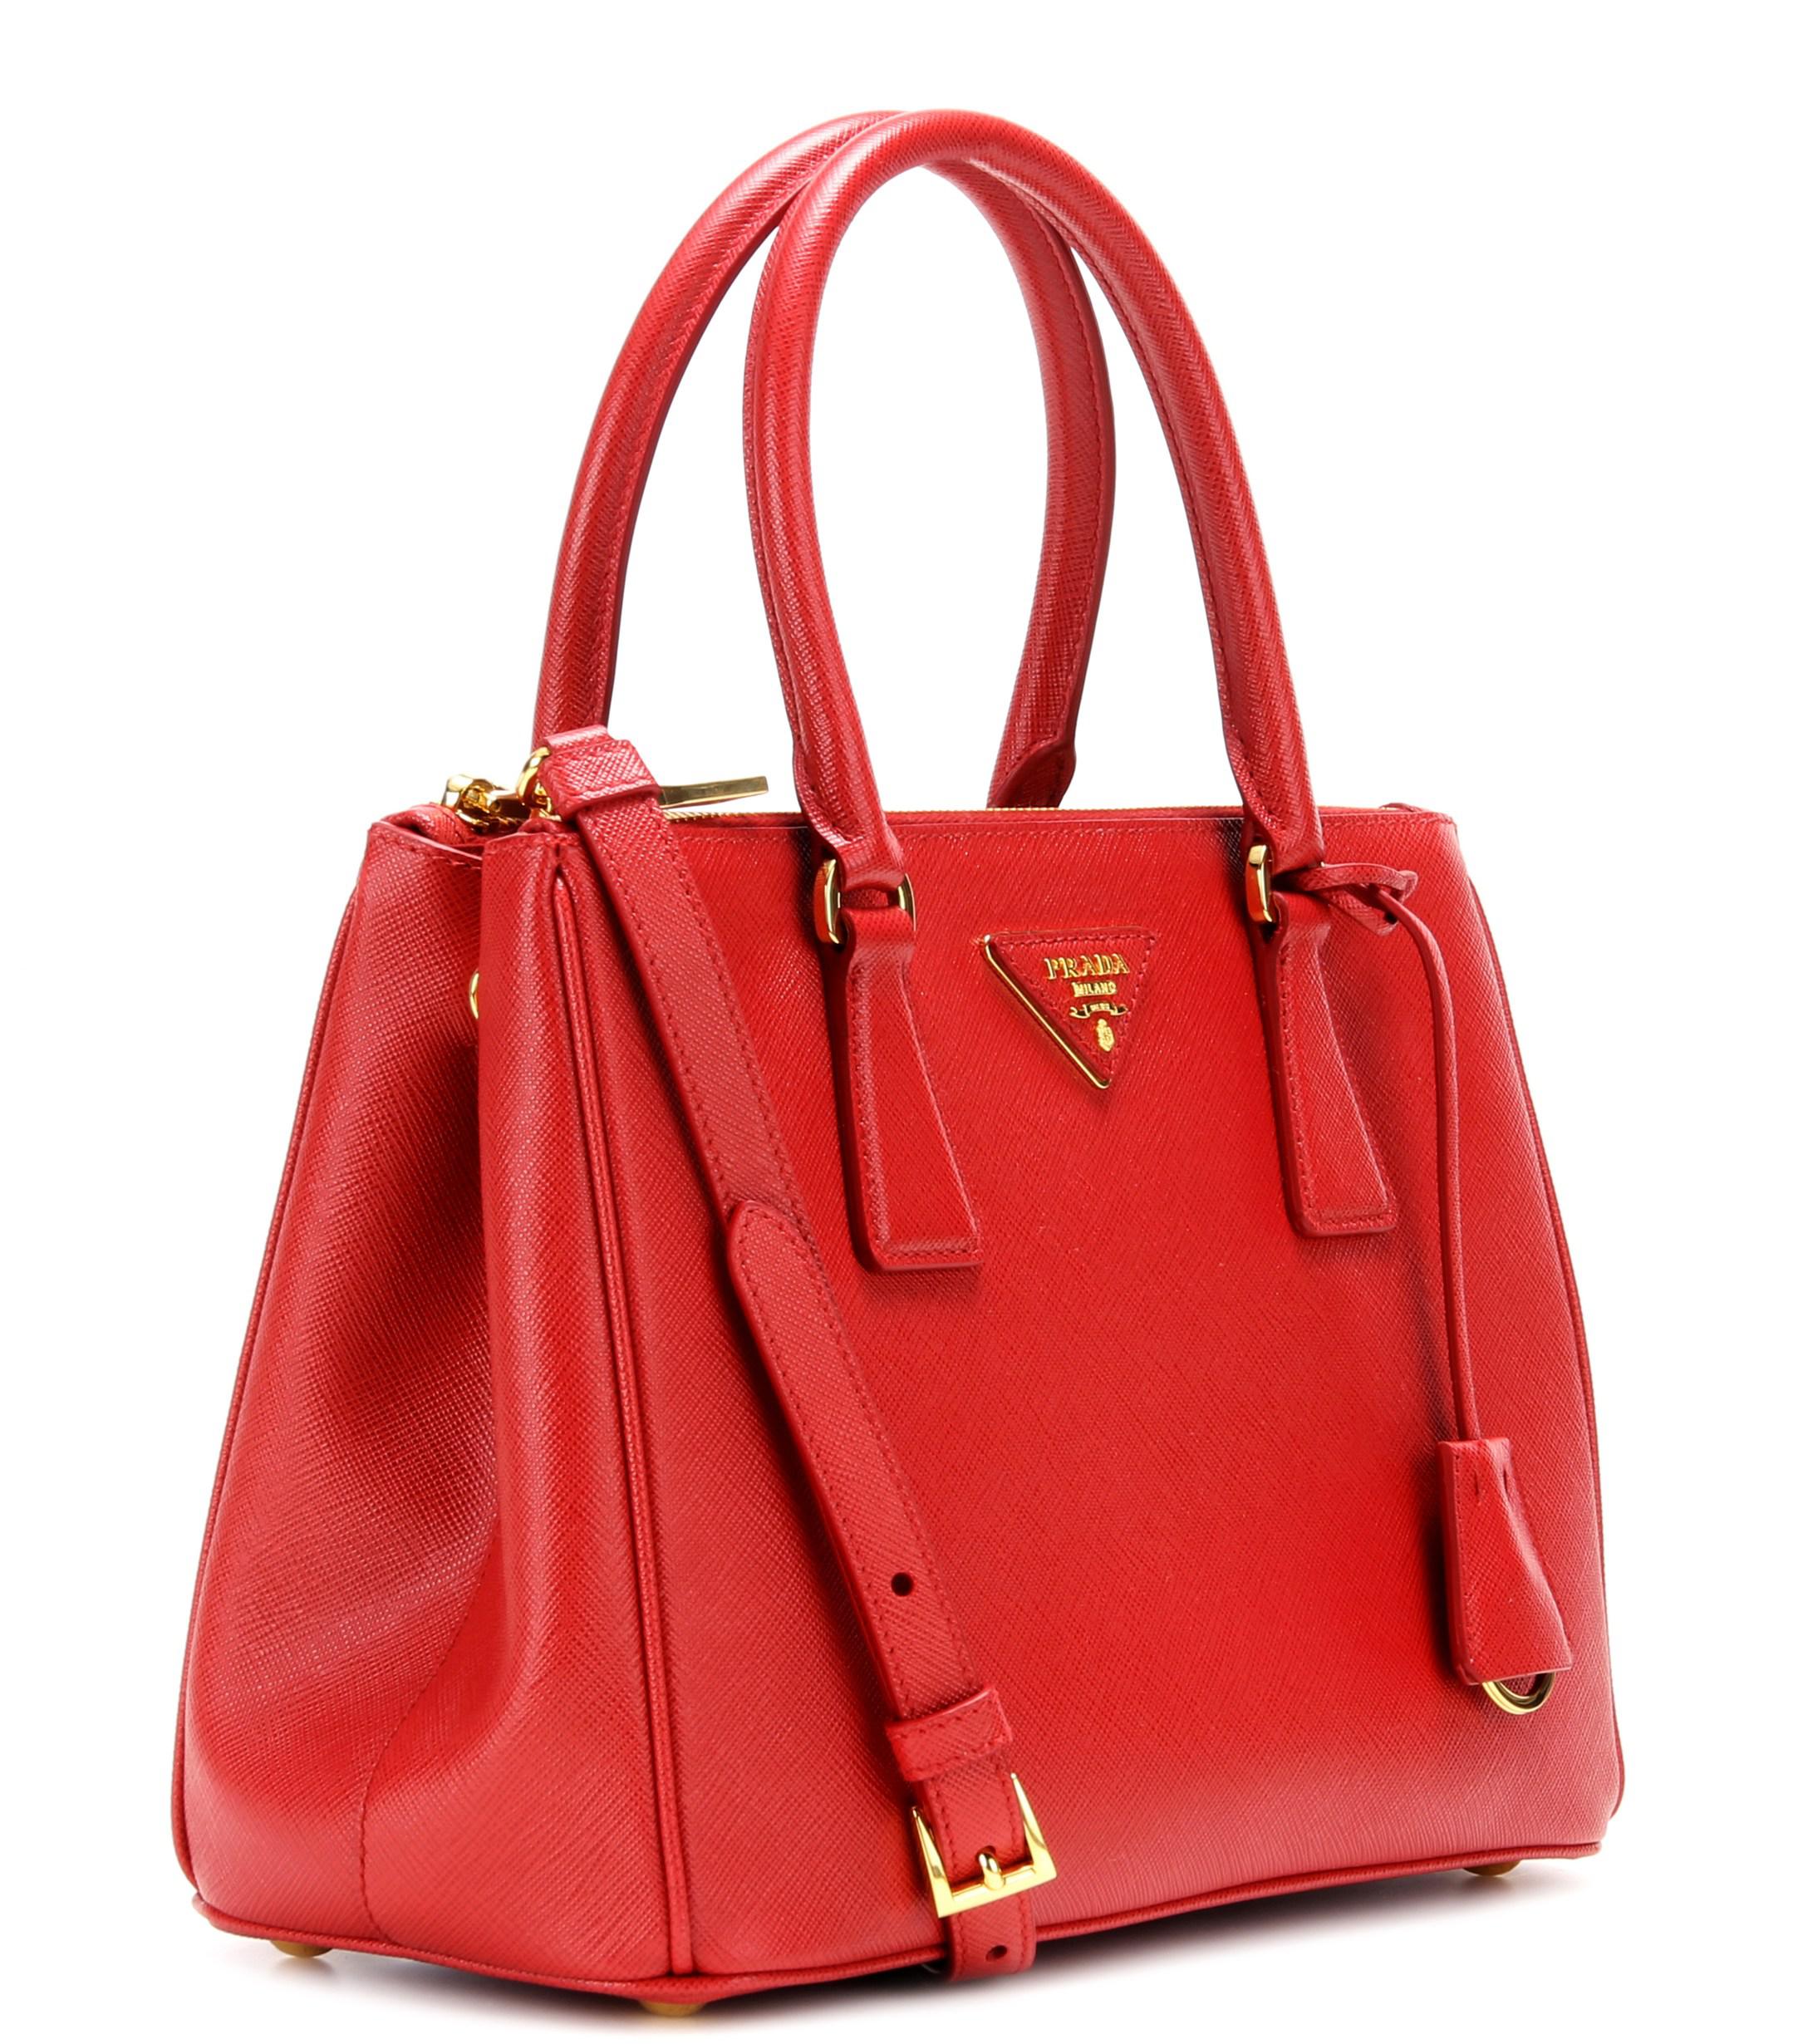 Prada Bags On Sale - Prada Bags: Prada Authentic Handbags Online